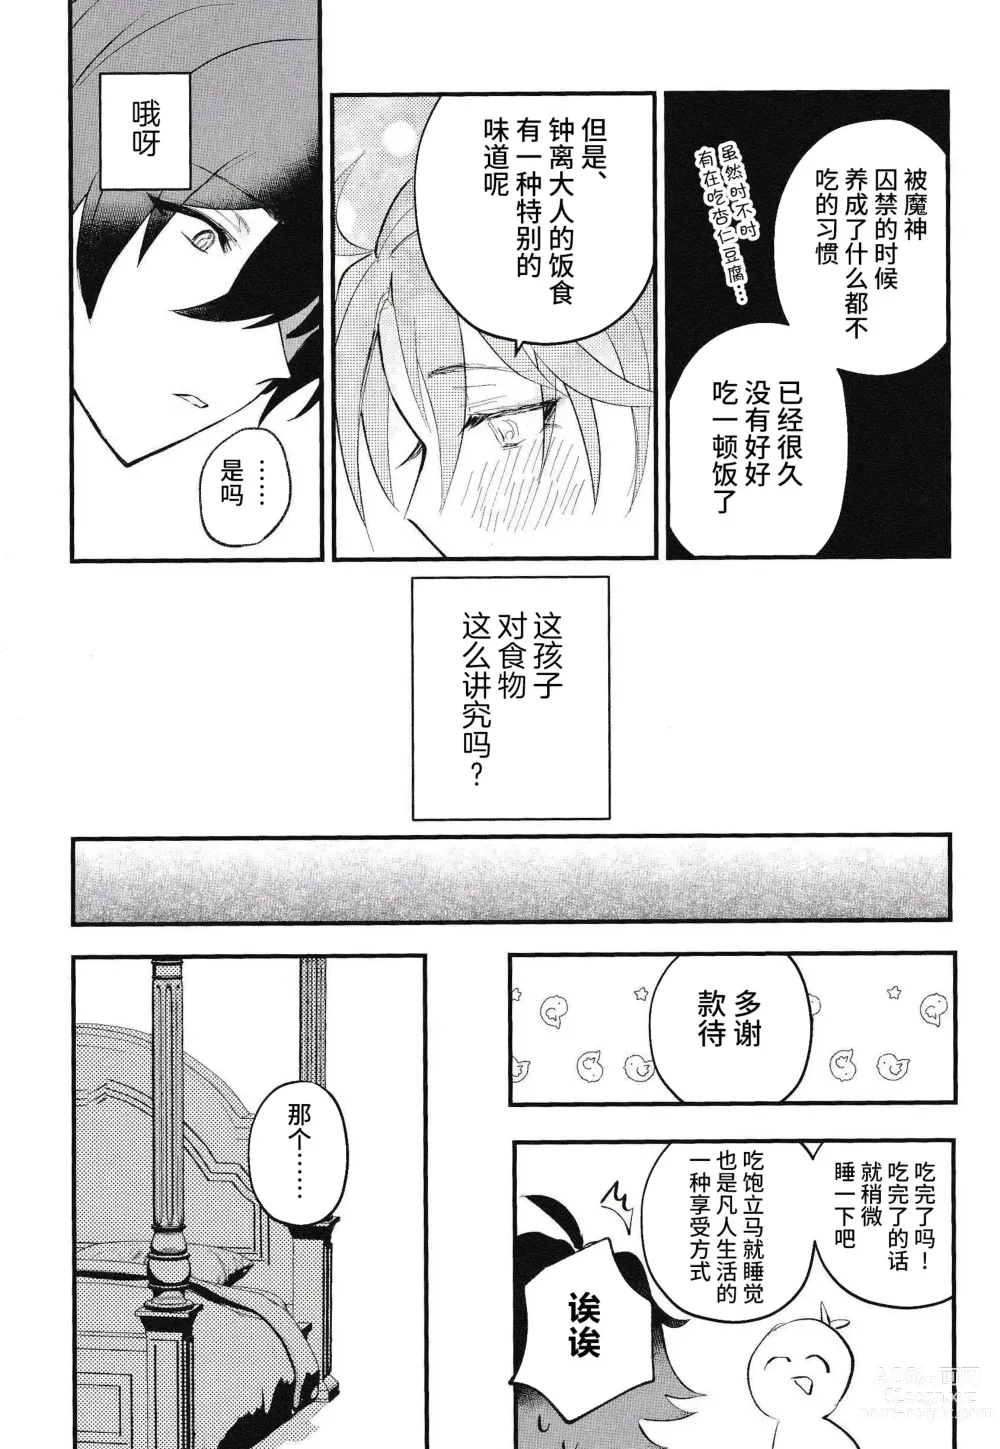 Page 9 of doujinshi Setsugetsuka Tomo ni - share a snow, moon, and flowers